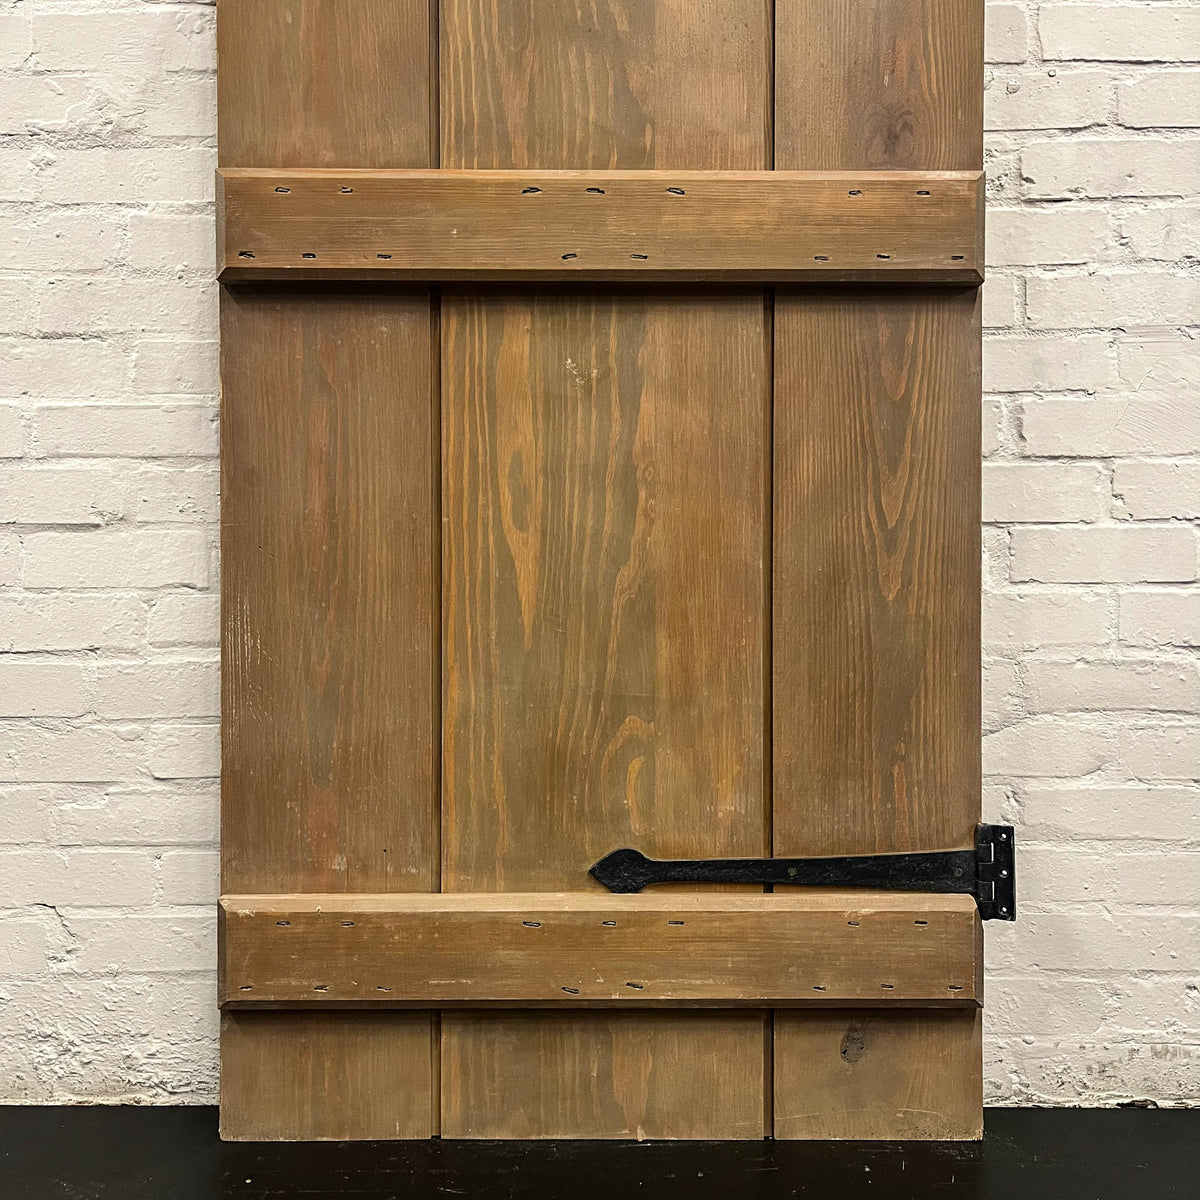 Antique Victorian Pine Latch Door - 193.5cm x 83cm | The Architectural Forum